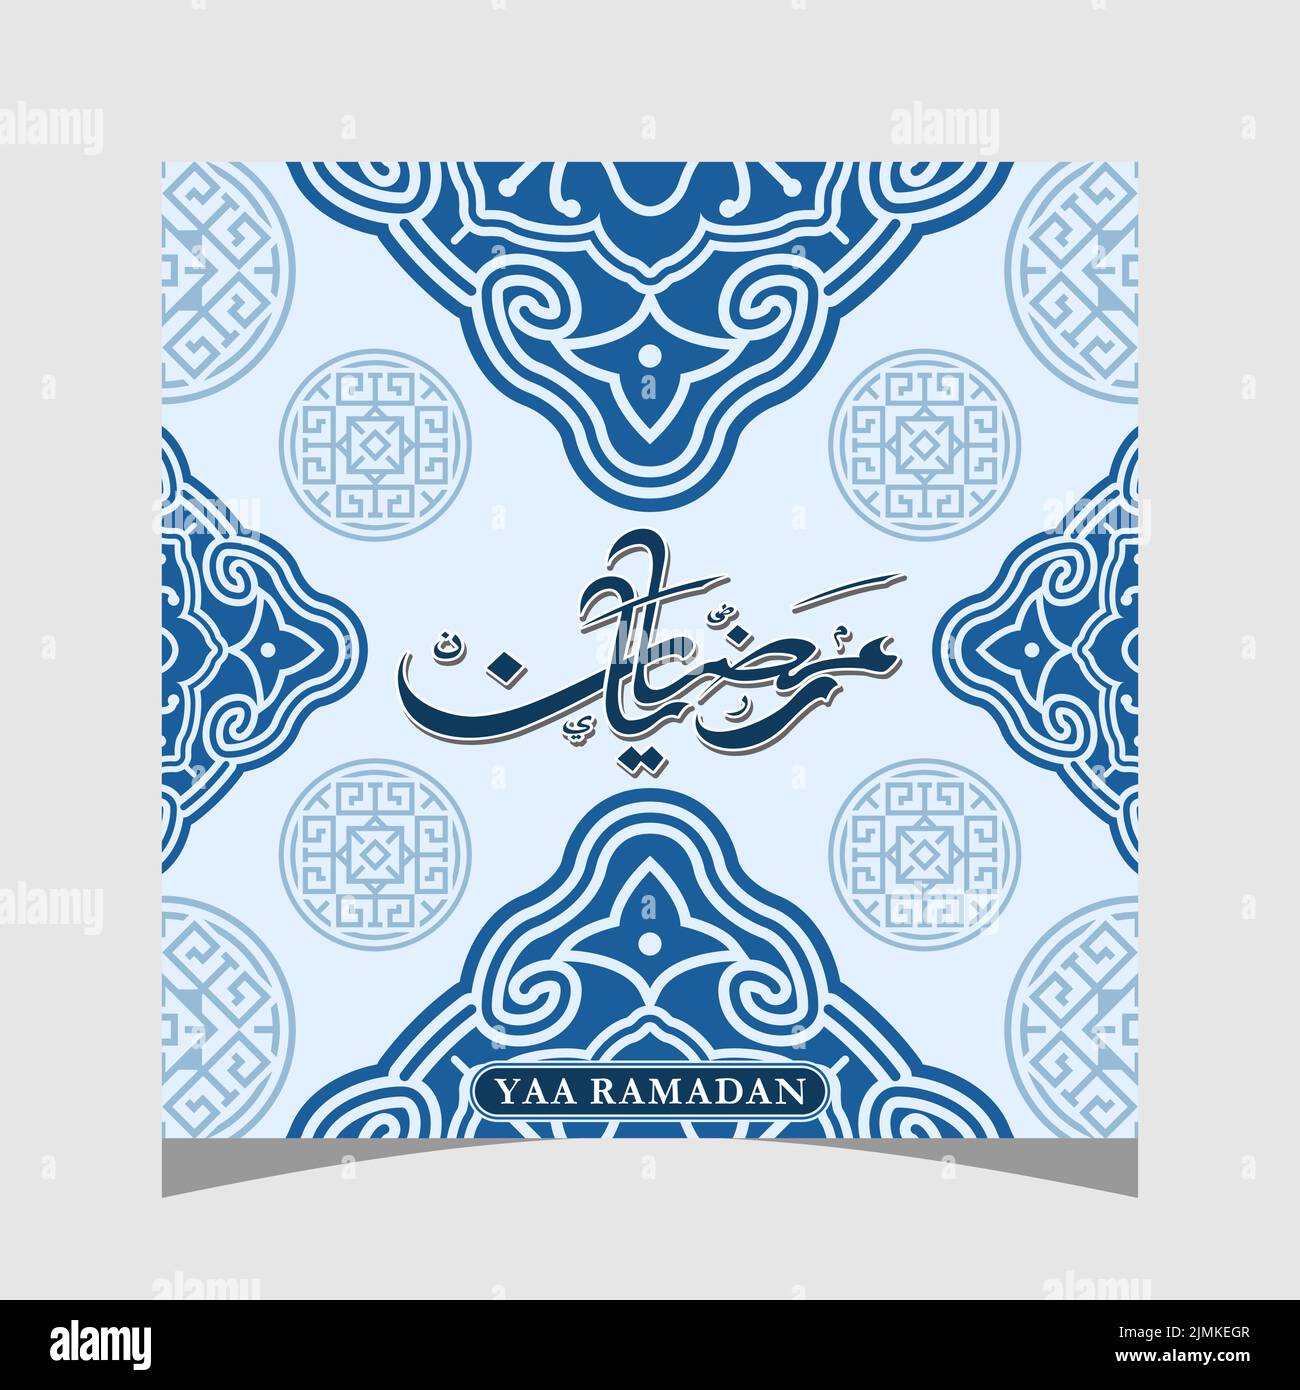 Arabic Calligraphy Wallpaper Ya Ramadhan Translation (Oh Ramadan) With Blue Themed Islamic Ornaments Stock Vector